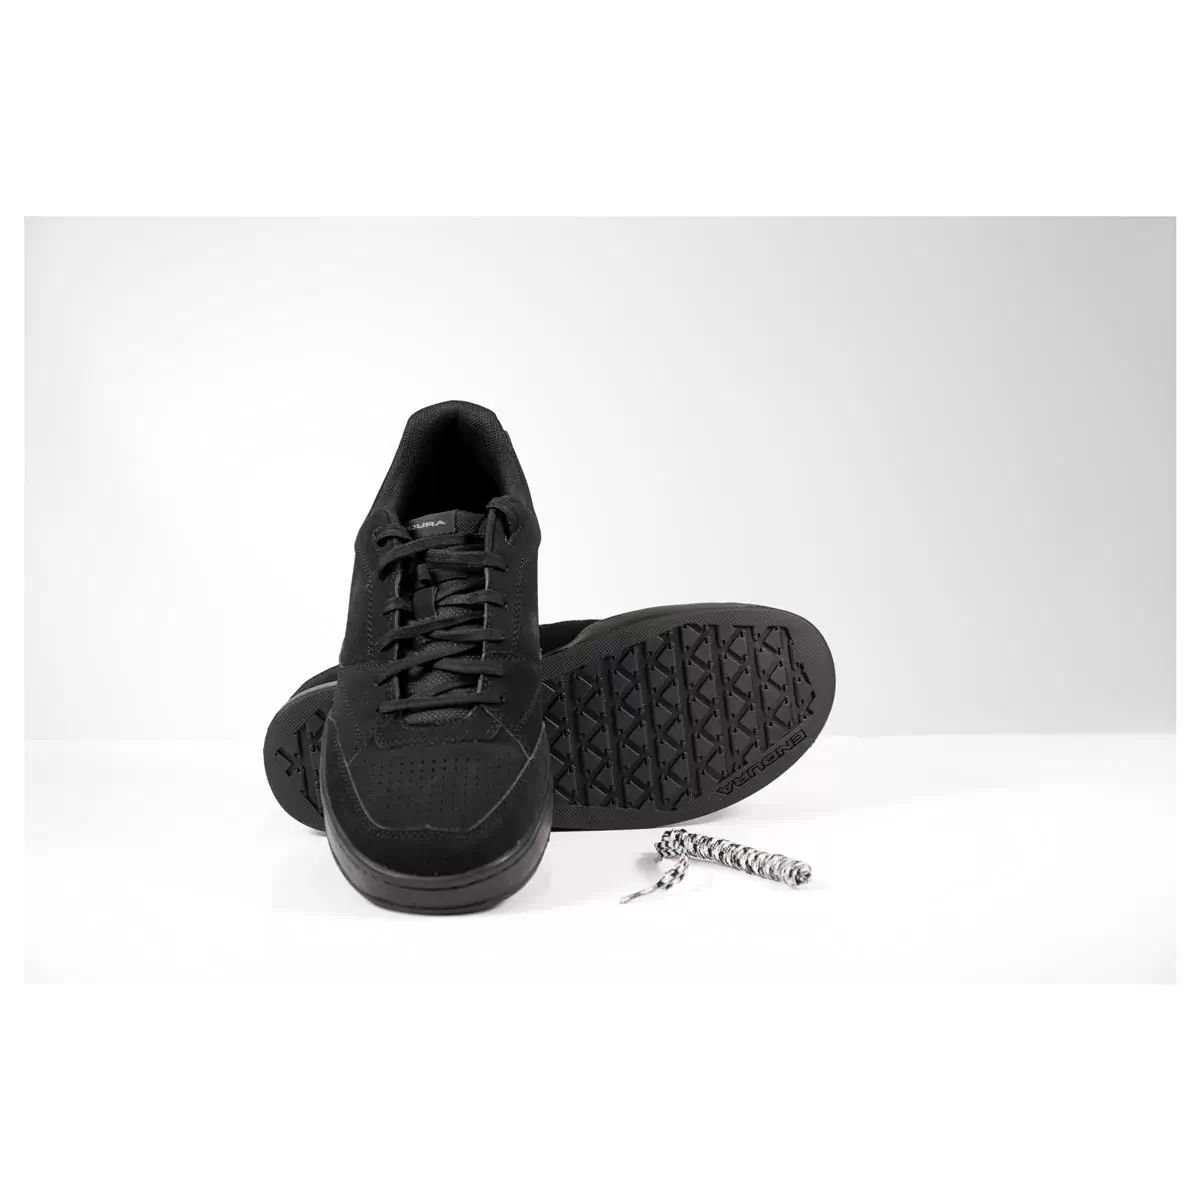 Hummvee Flat Pedal Shoes Black Size 43 #3